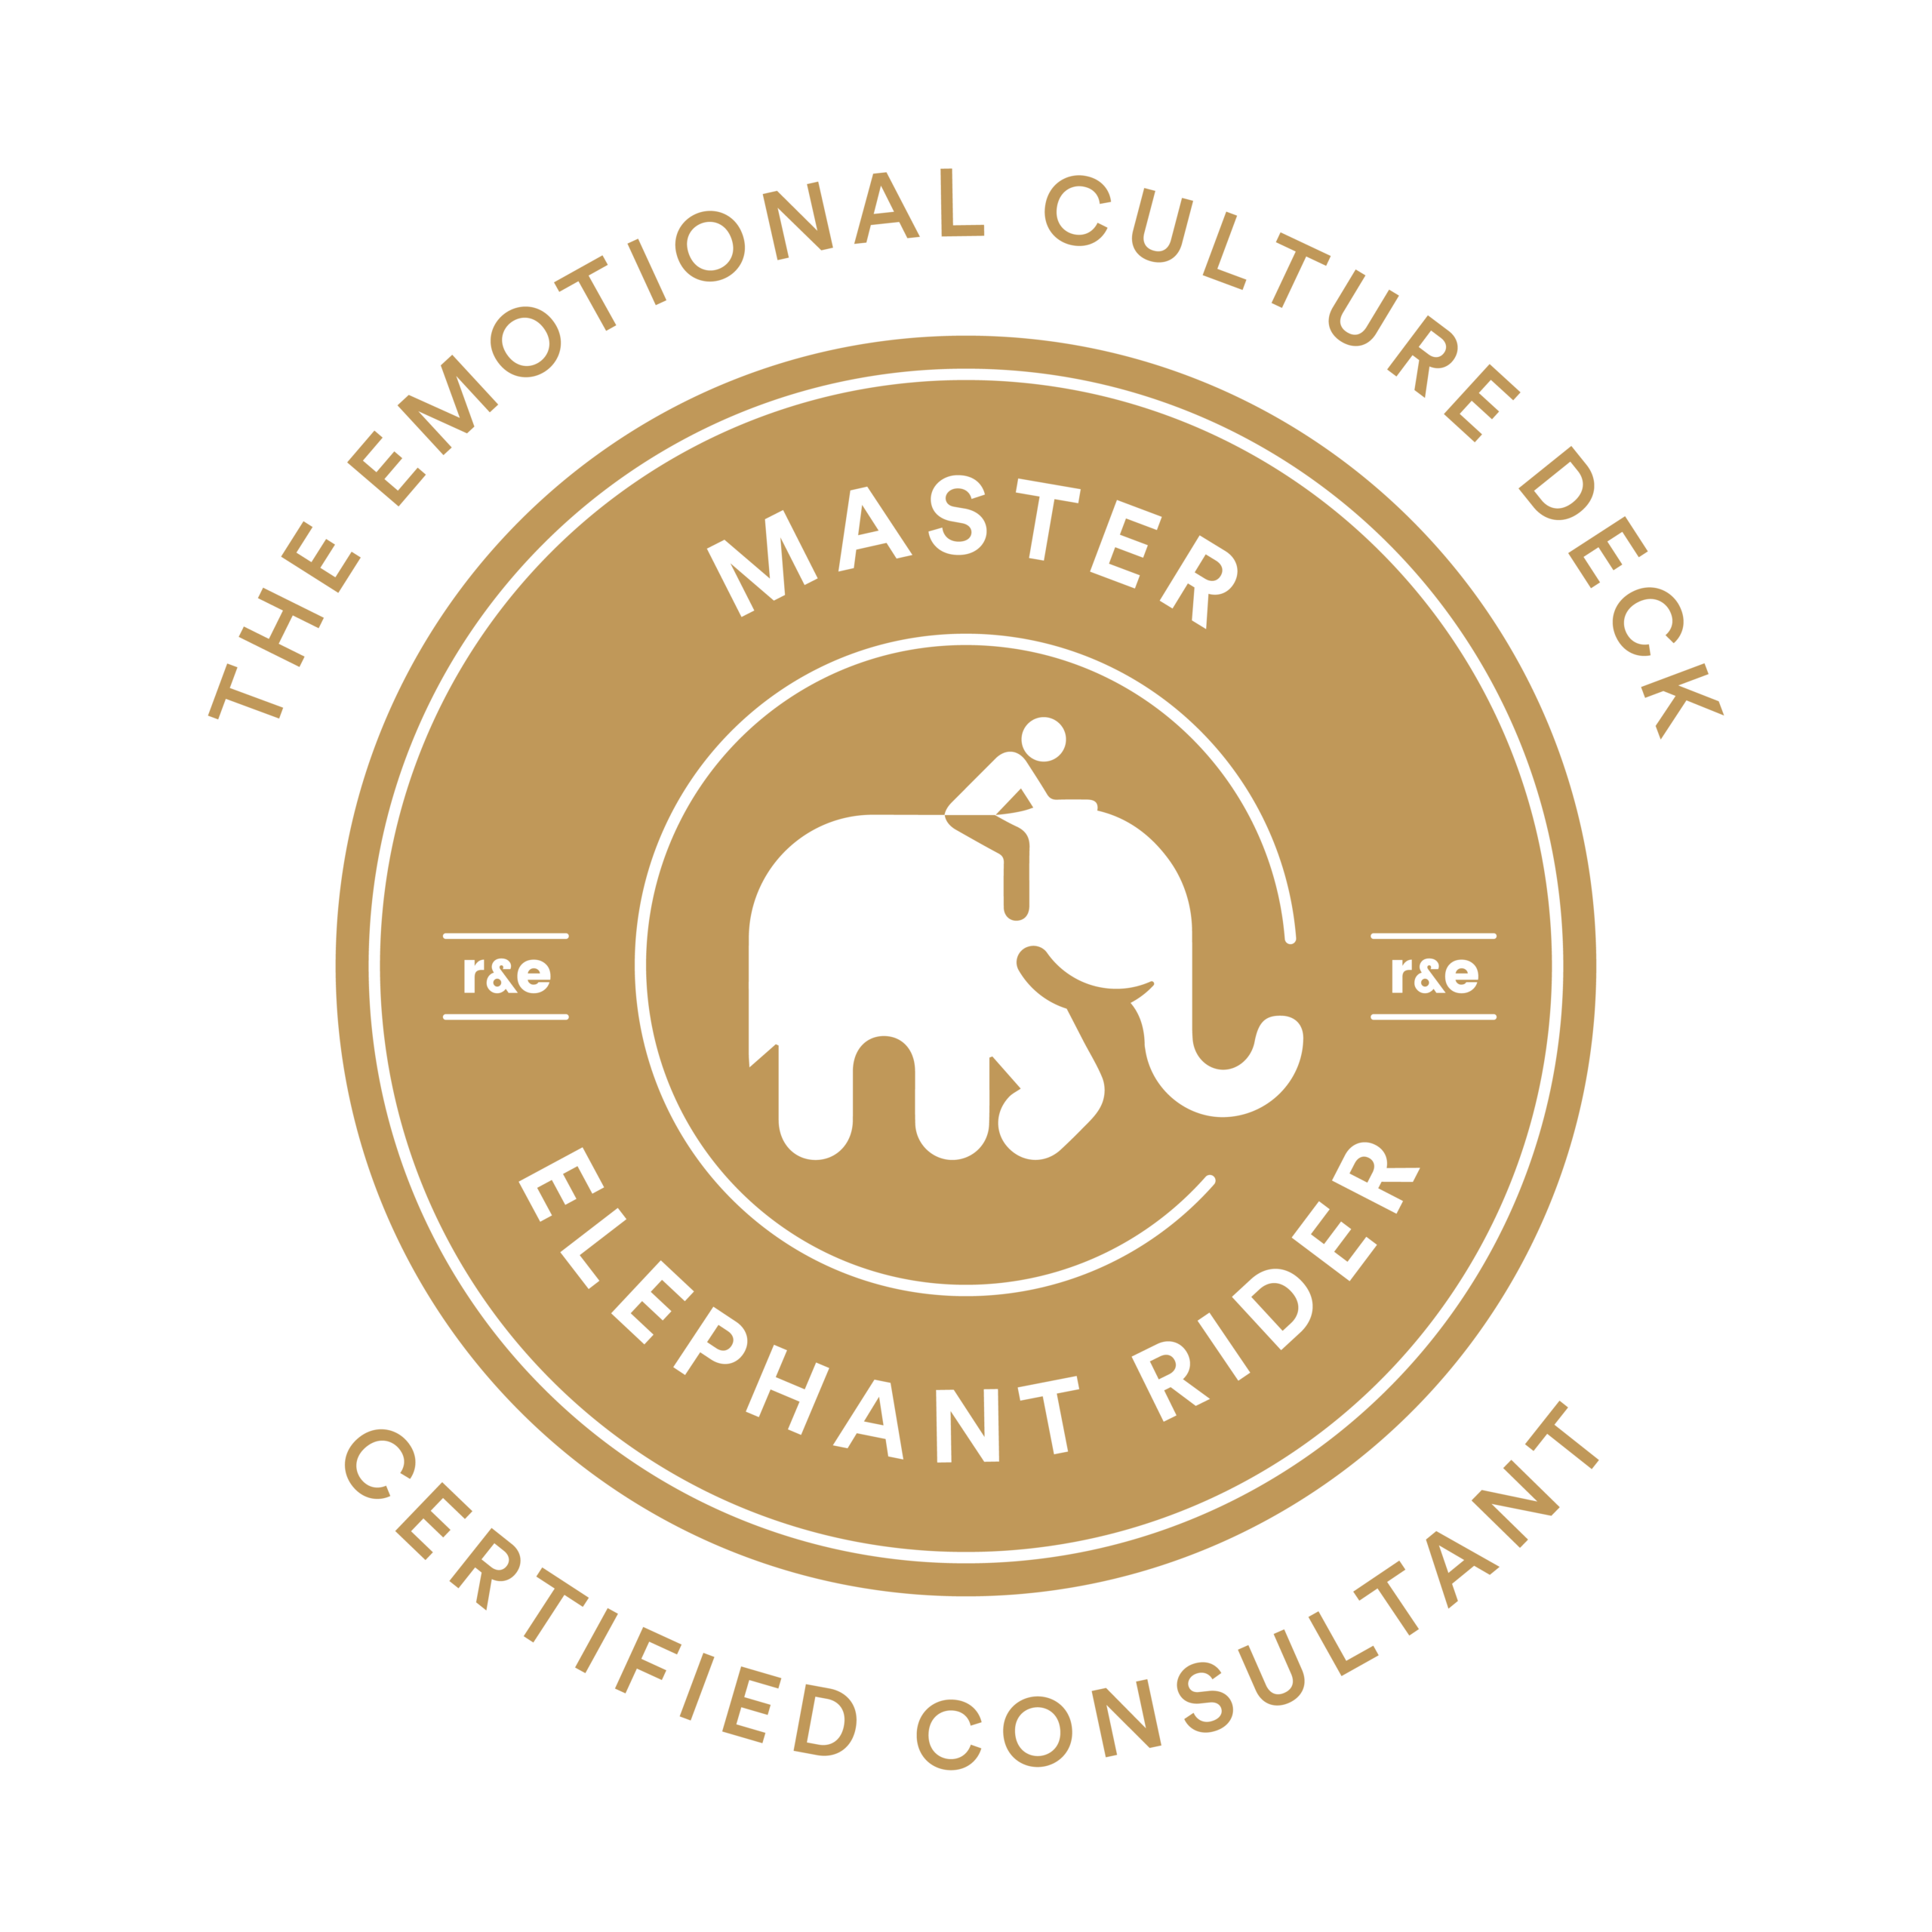 Master Elephant Rider Consultant